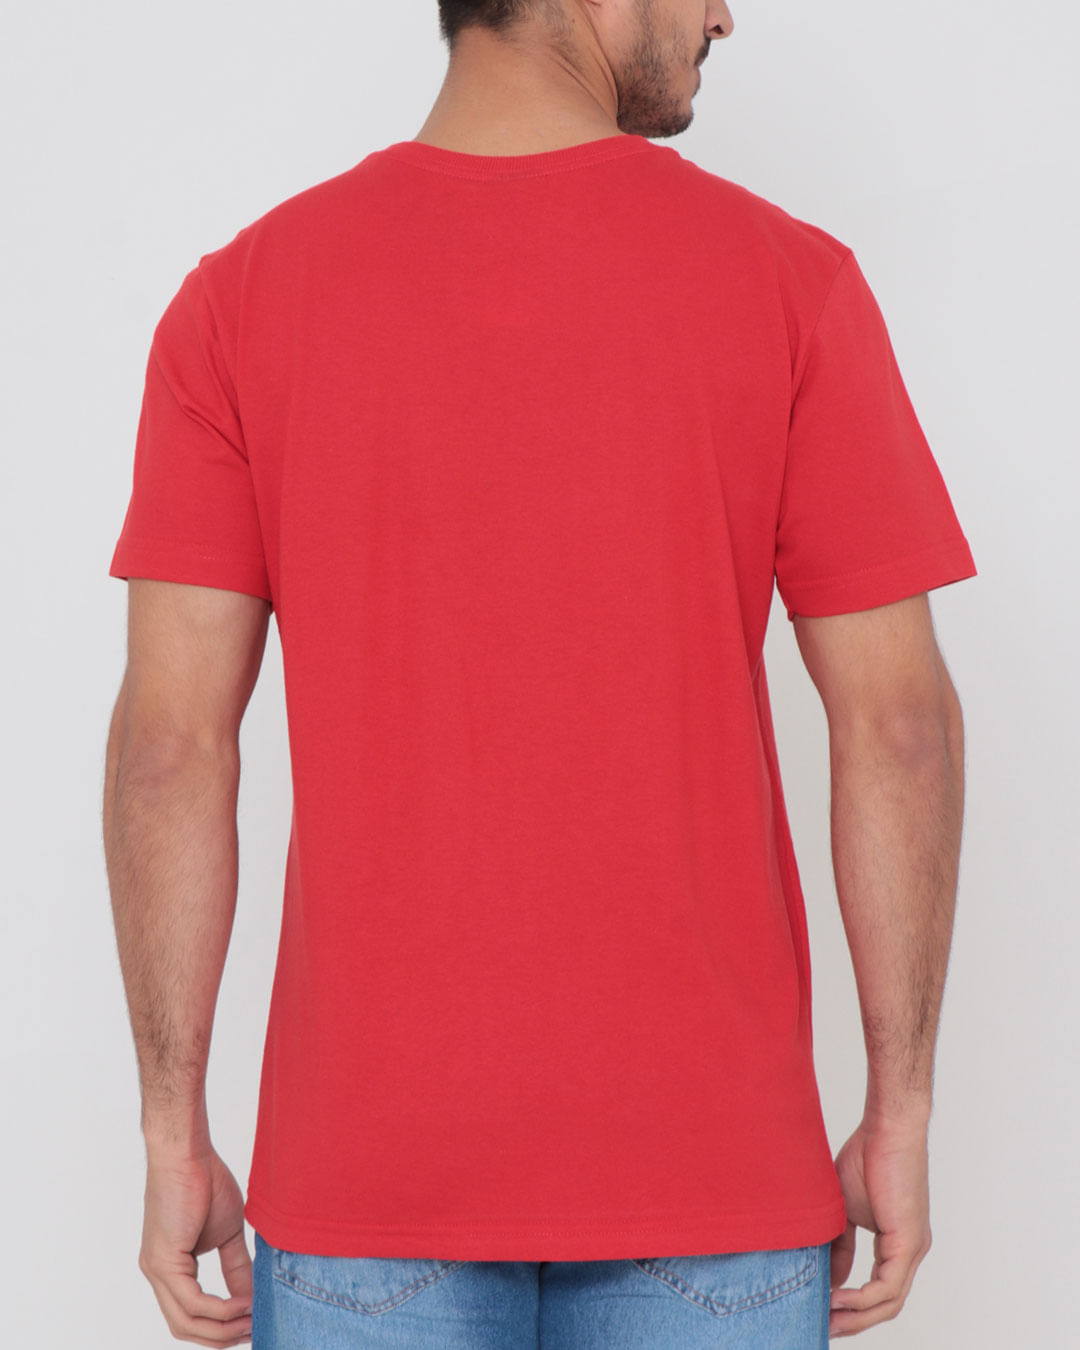 Camiseta-Estampa-Frontal-Ecko-Unlimited-Vermelha